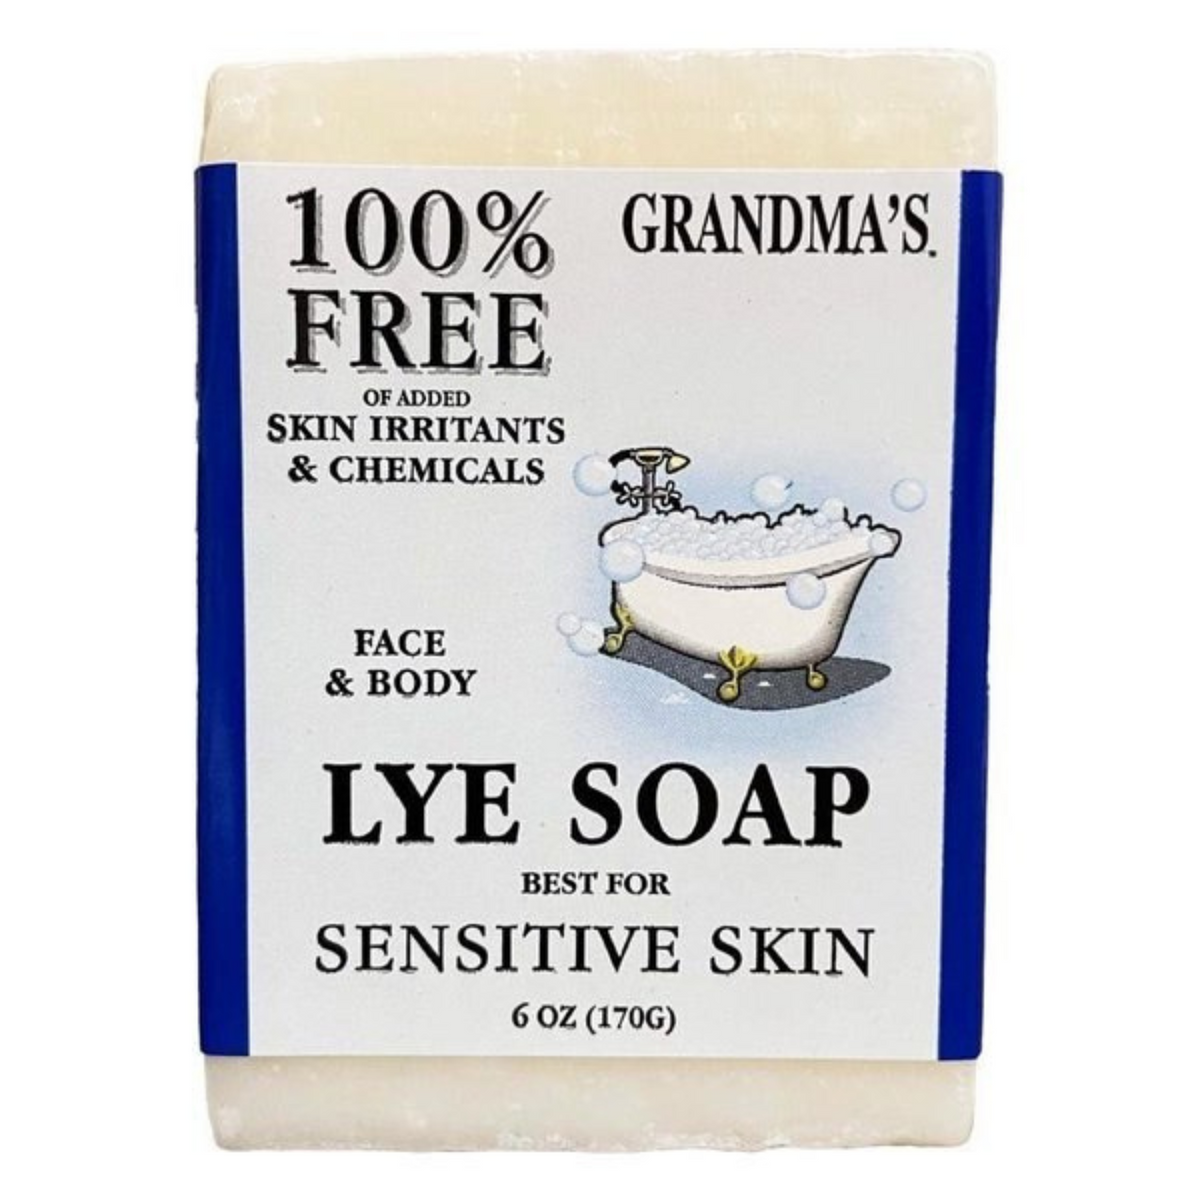 Remwood Products Grandma's Lye Soap (6.6 oz) #29323